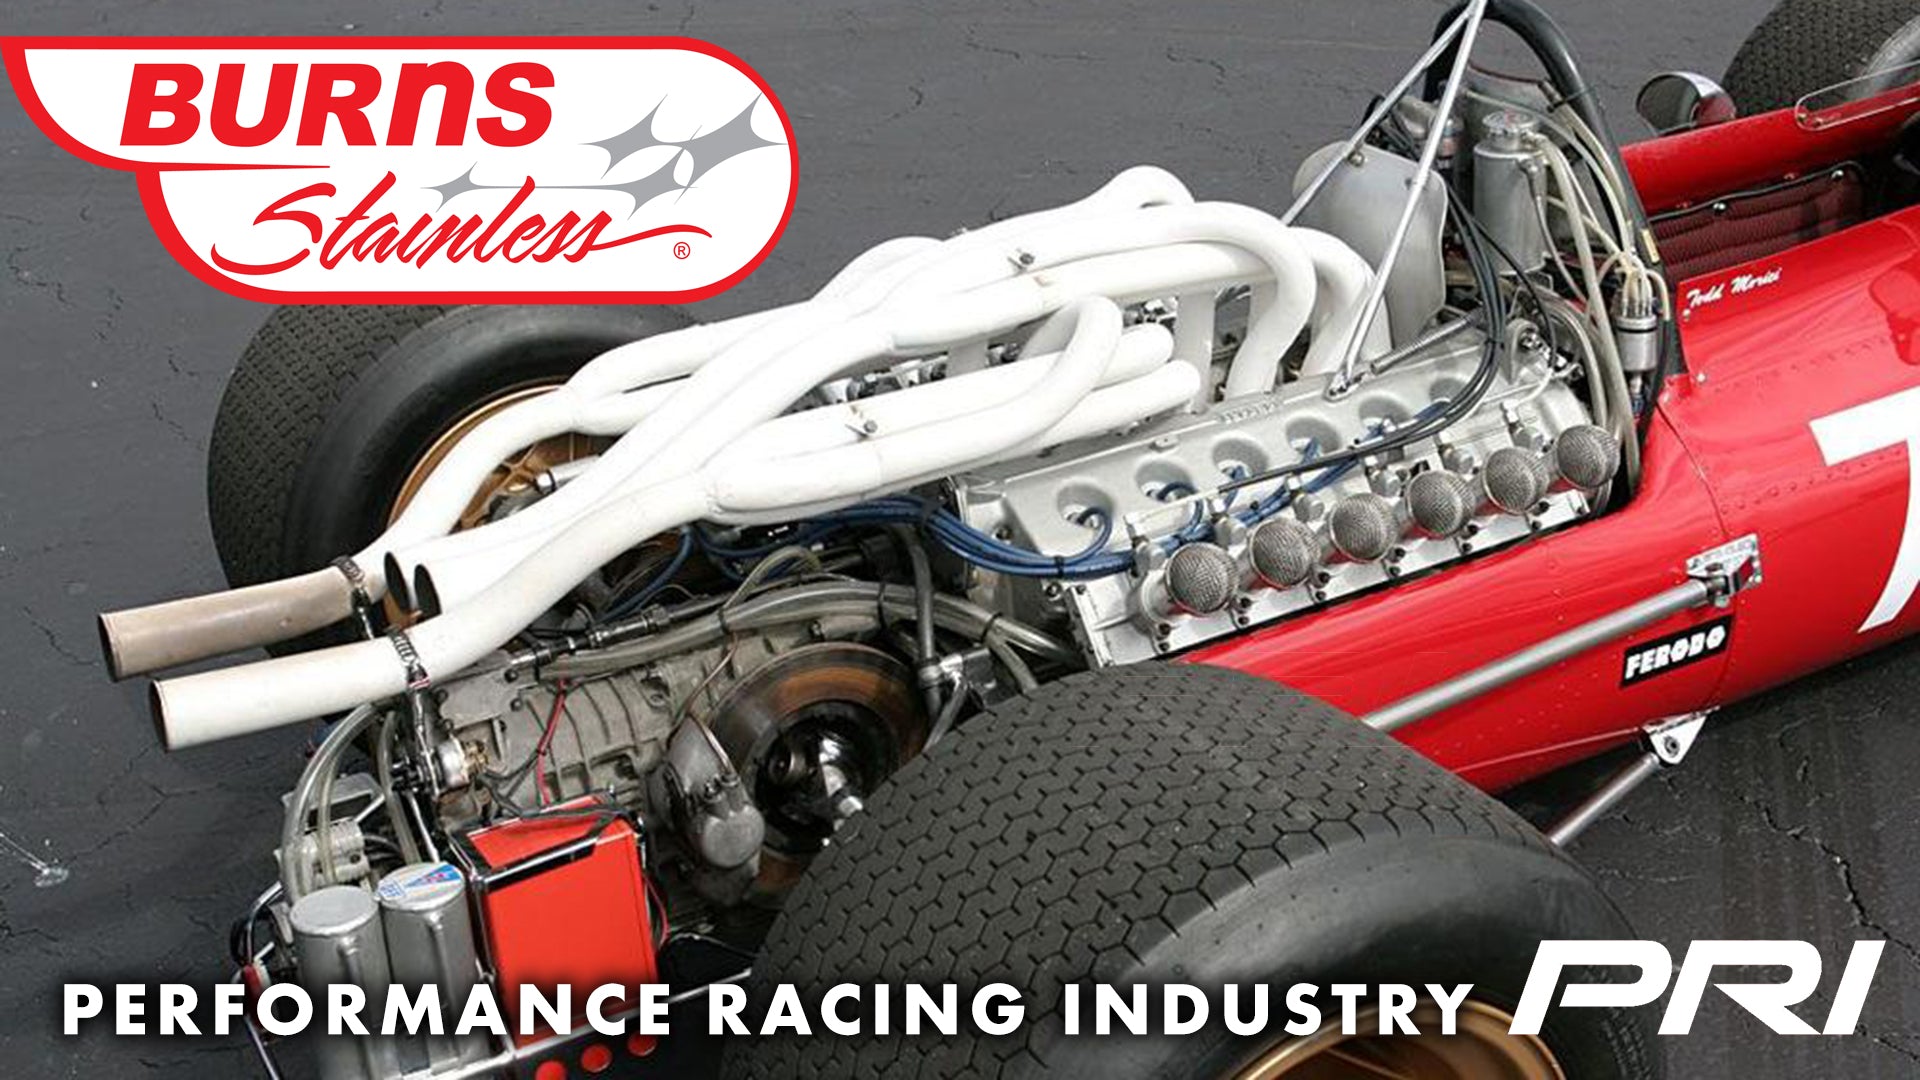 Introducing Performance Racing Industry PRI